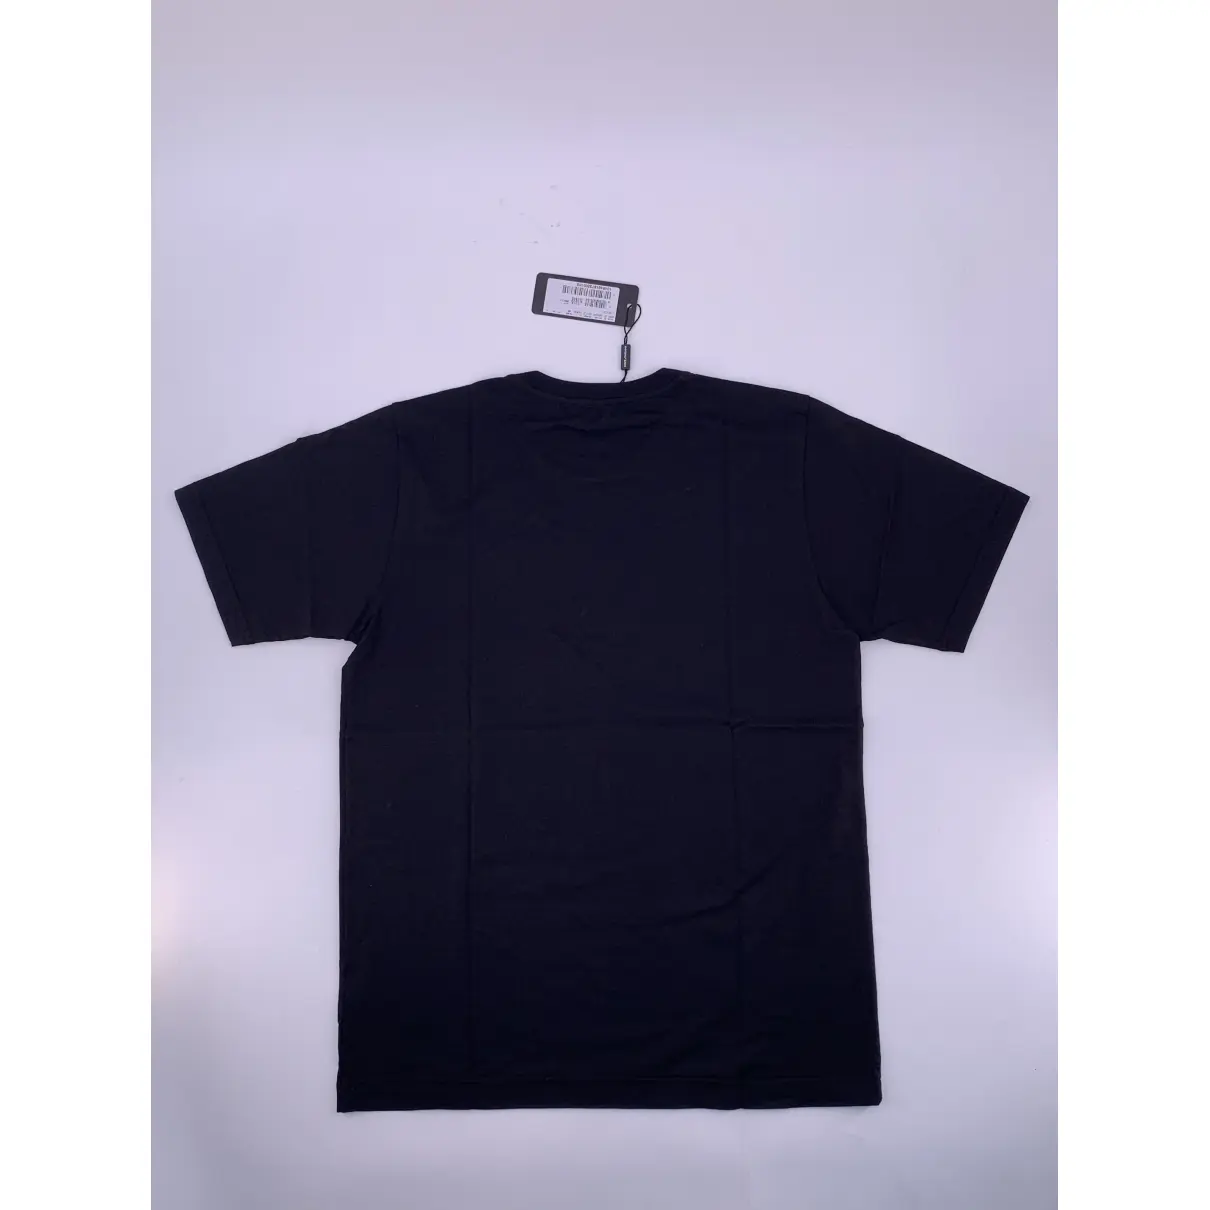 Buy Dolce & Gabbana Black Cotton T-shirt online